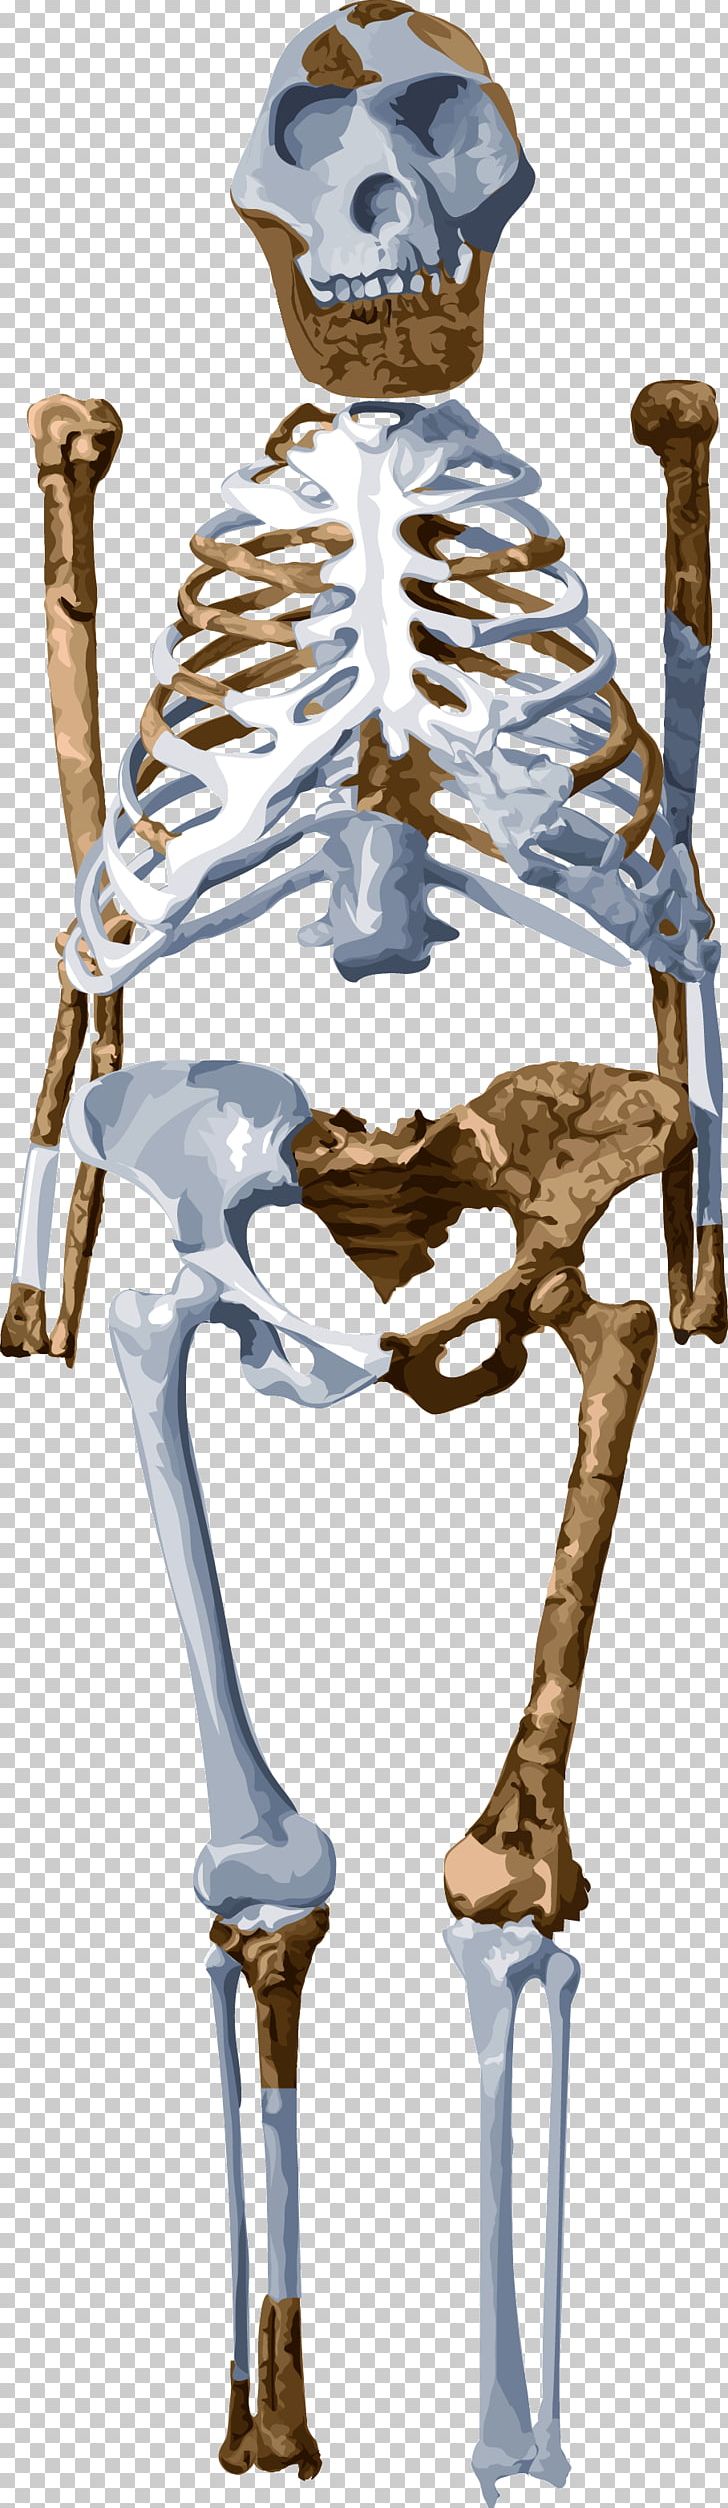 Skeleton Lucy Homo Sapiens Australopithecus Afarensis Fossil PNG, Clipart, Ape, Australopithecus, Australopithecus Afarensis, Australopithecus Sediba, Bipedalism Free PNG Download